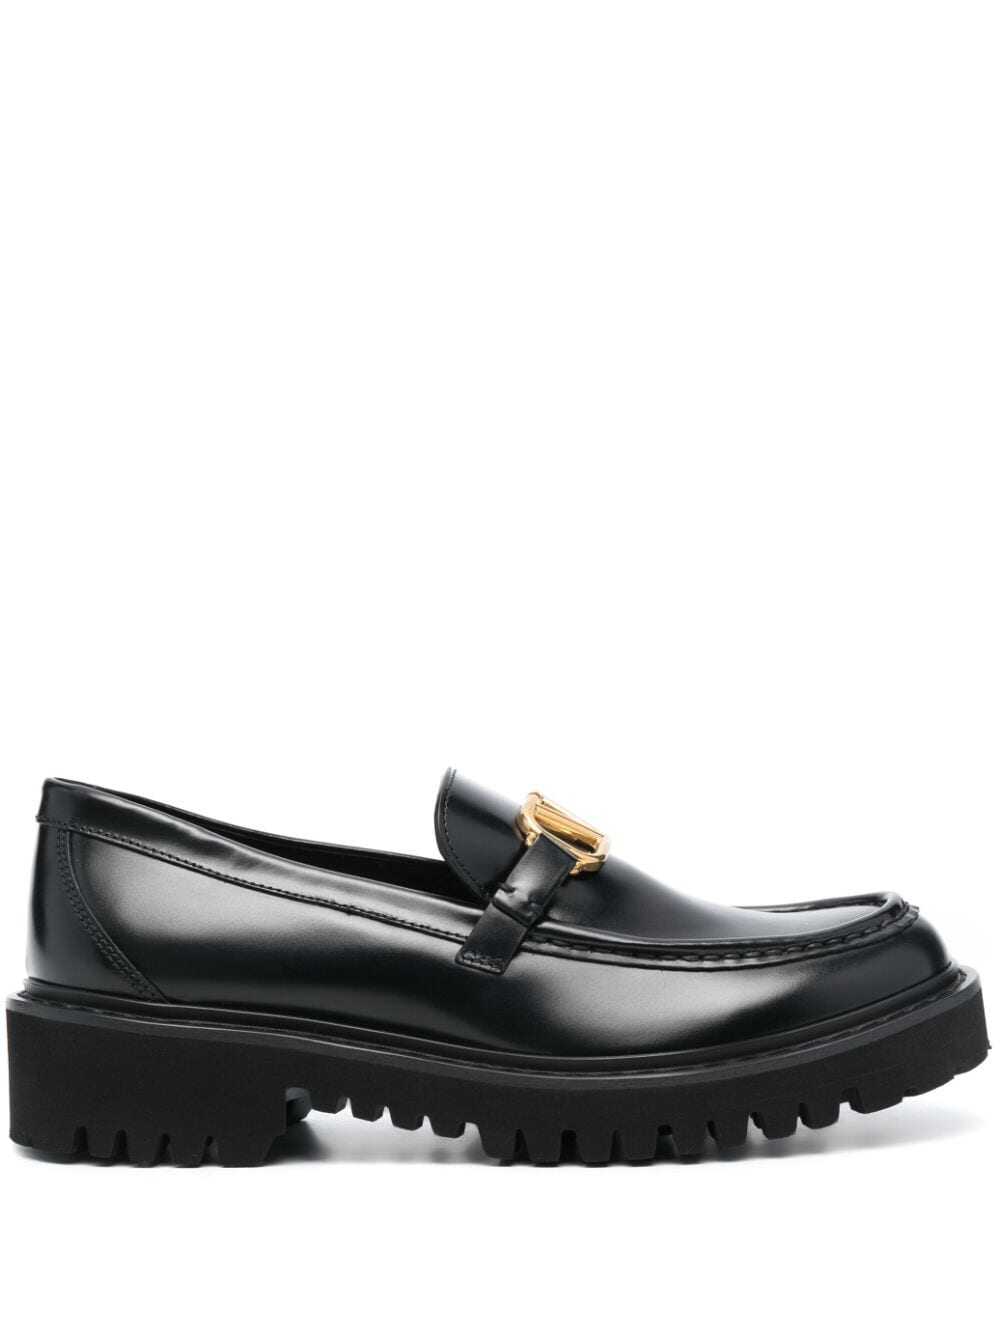 Valentino Garavani Flat Shoes Black Black image7